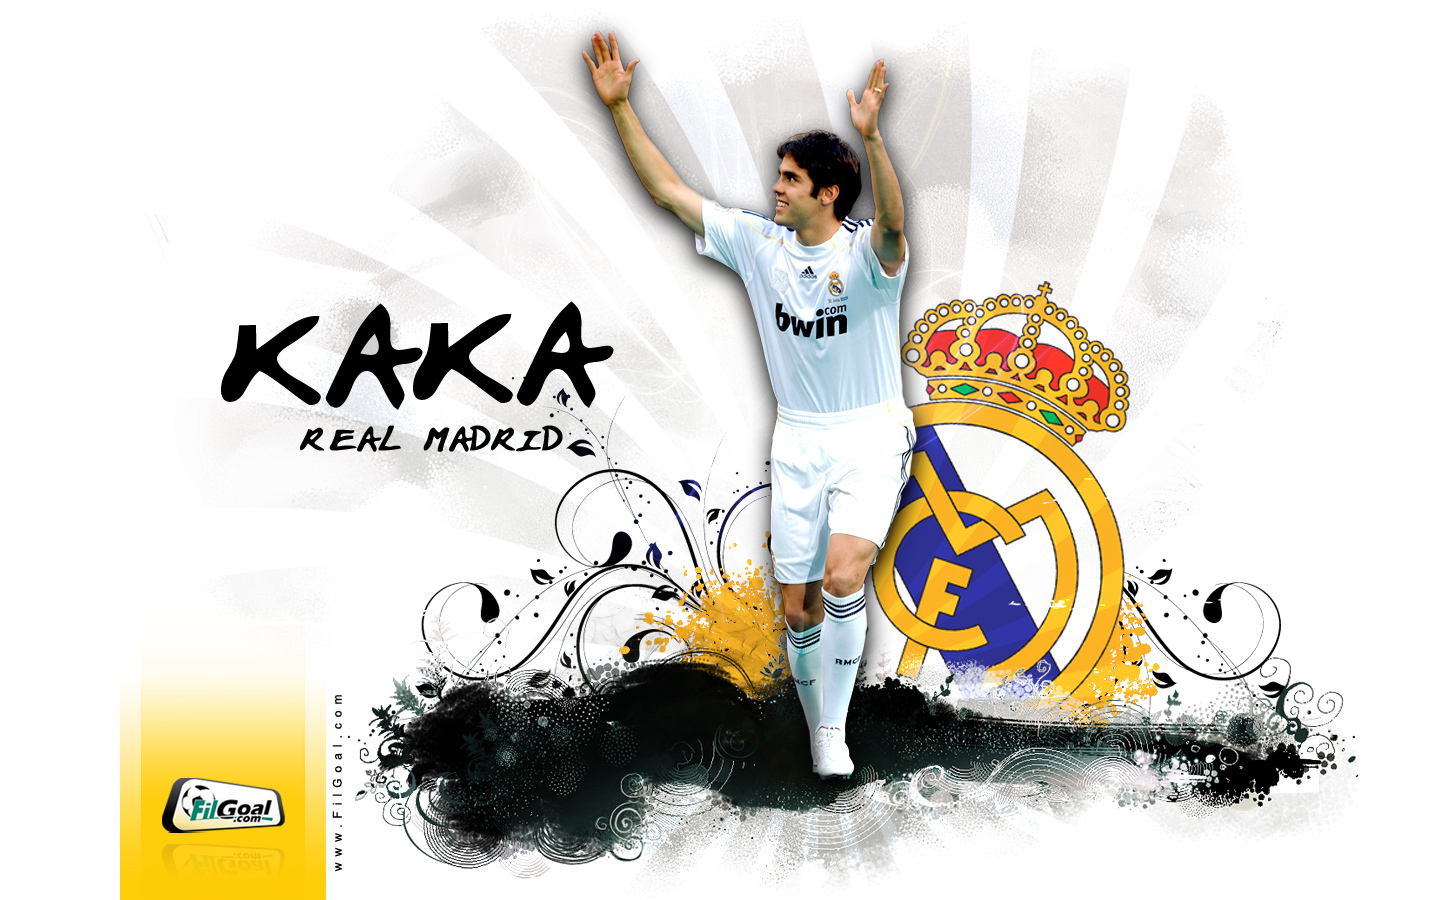 صور أبطال ريال مدريد...ملوك إسبانيا Kak-Real-Madrid-ricardo-kaka-9204910-1440-900